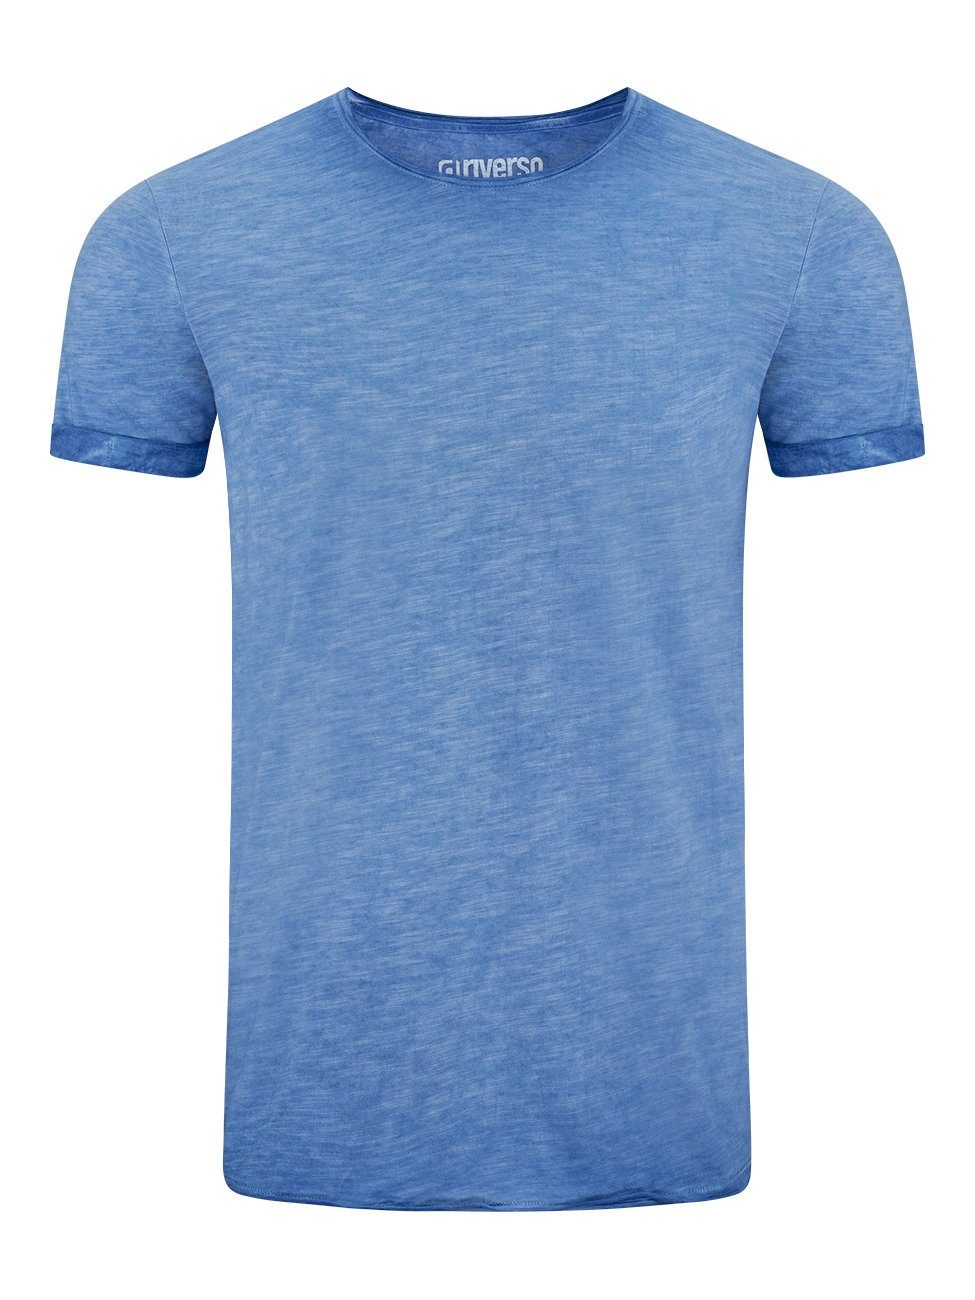 aus RIVMatteo Pack 100% riverso (4-tlg) mit Baumwolle Regular T-Shirt Fit Herren Shirt Rundhalsausschnitt Tee 4 Shirt Kurzarm Basic